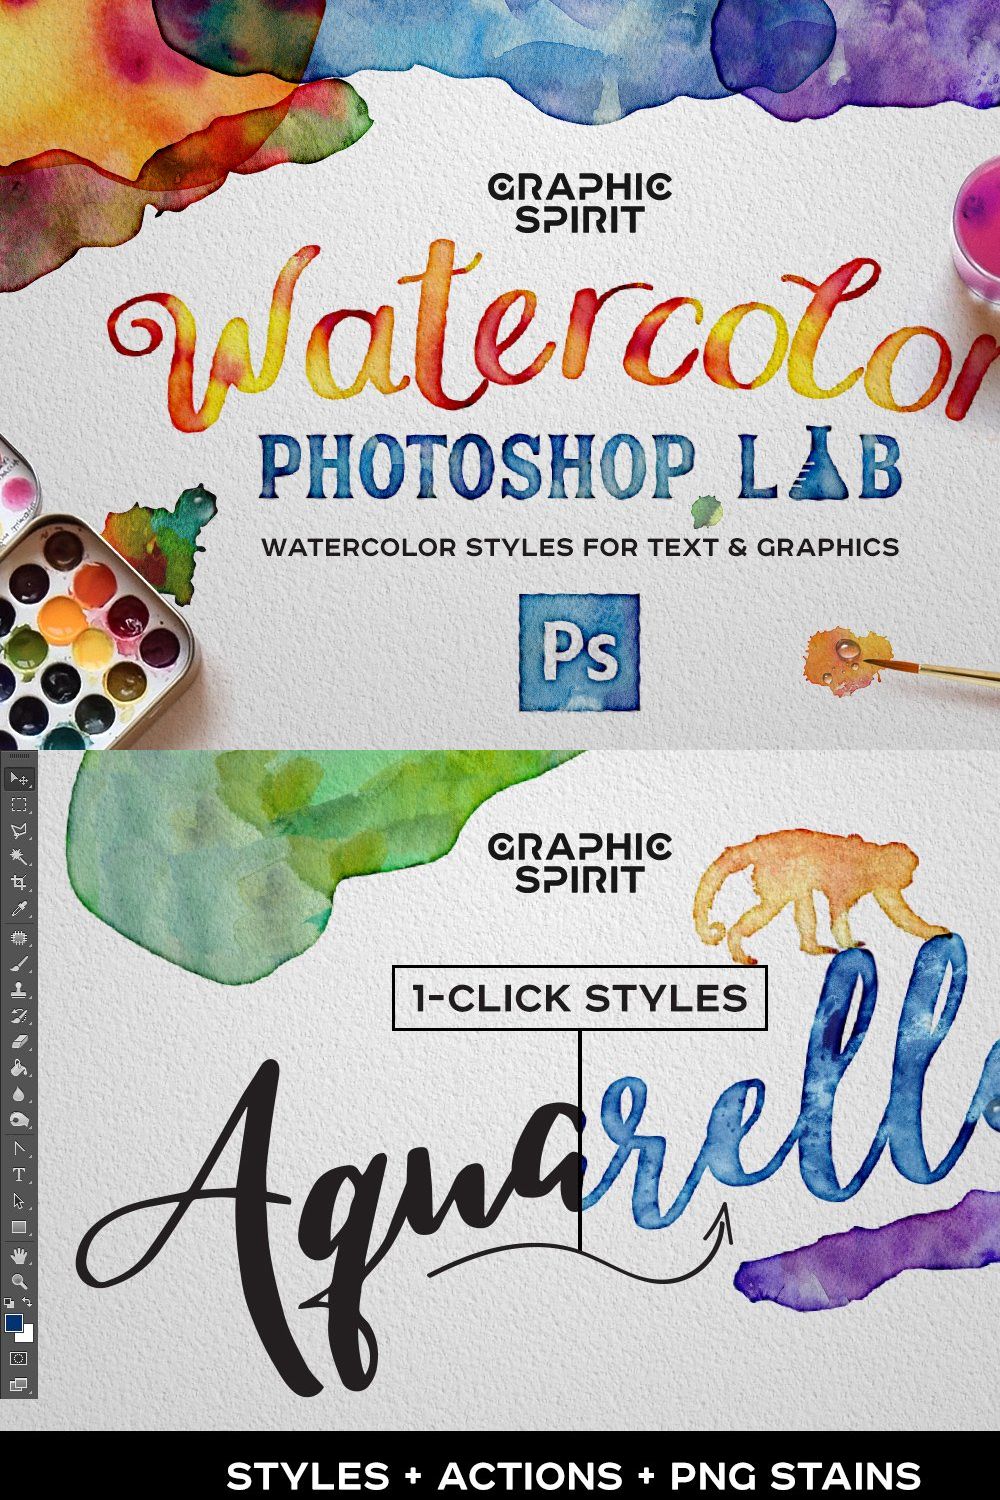 Watercolor PHOTOSHOP Lab pinterest preview image.